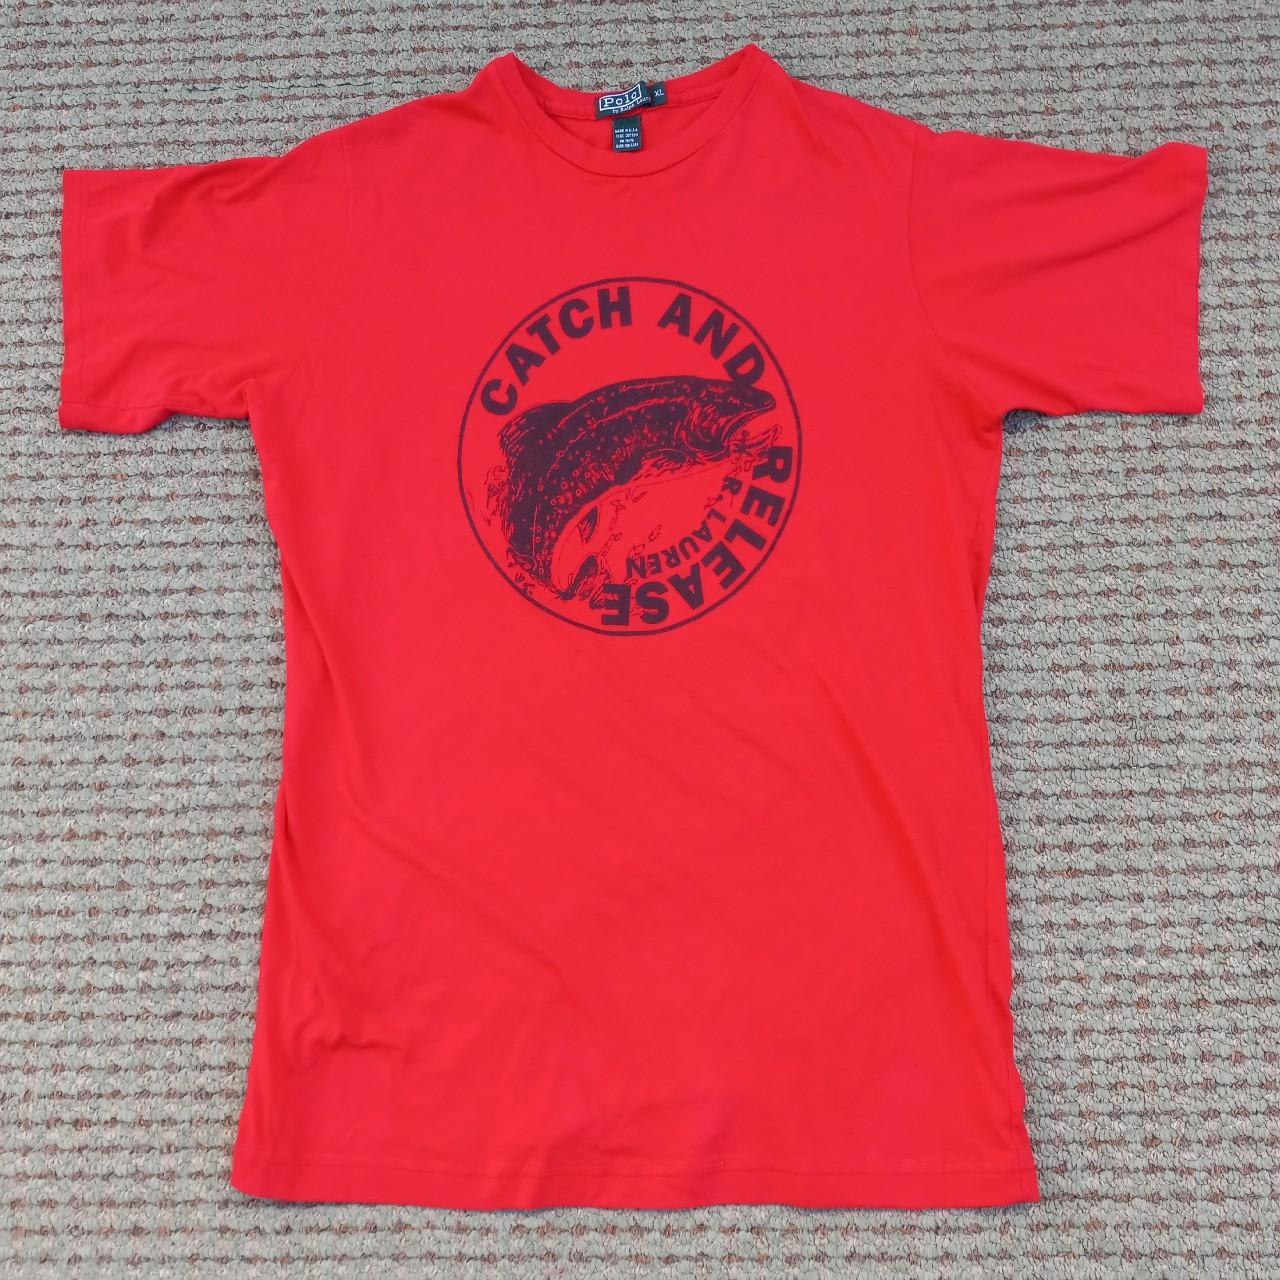 Vintage Polo Ralph Lauren Sportsman t-shirt. Catch... - Depop